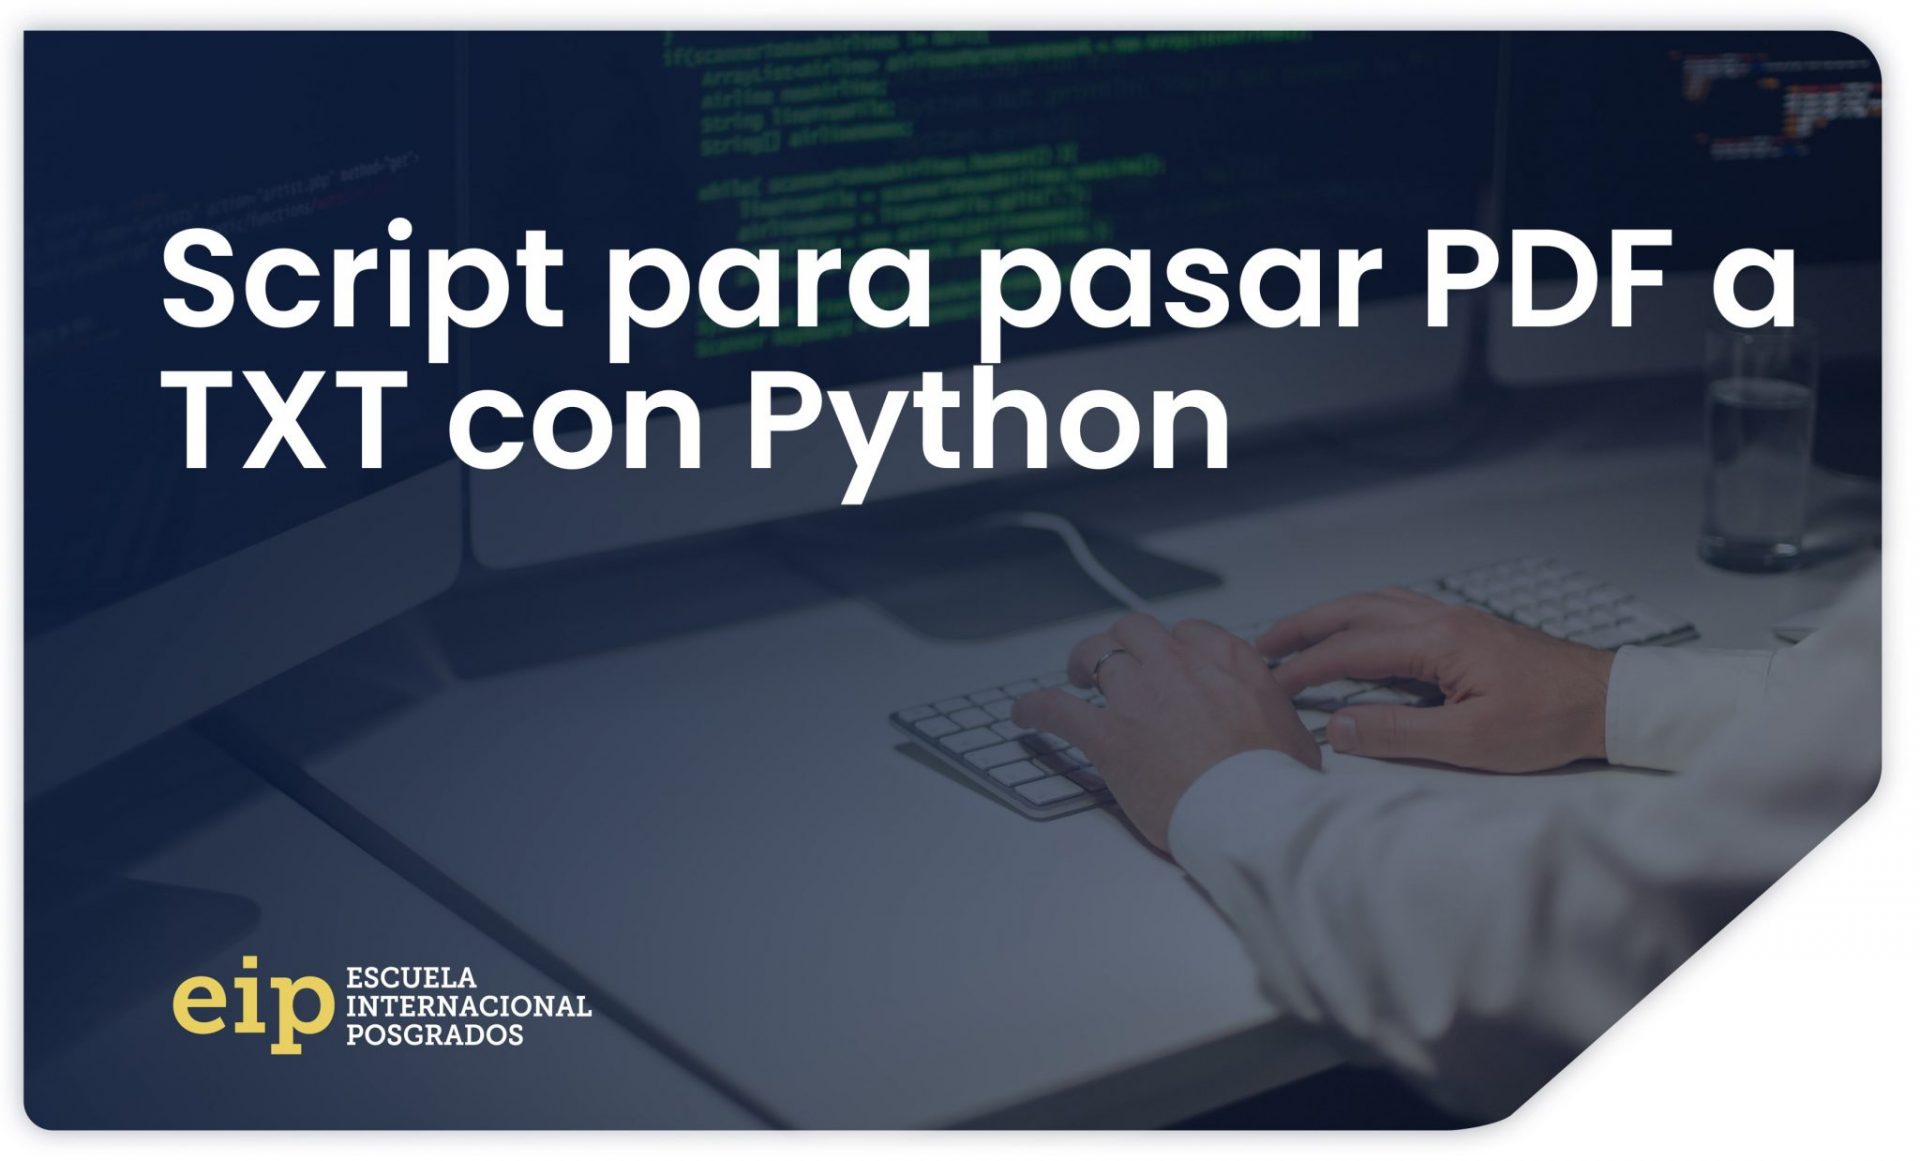 Python Script to Convert a File